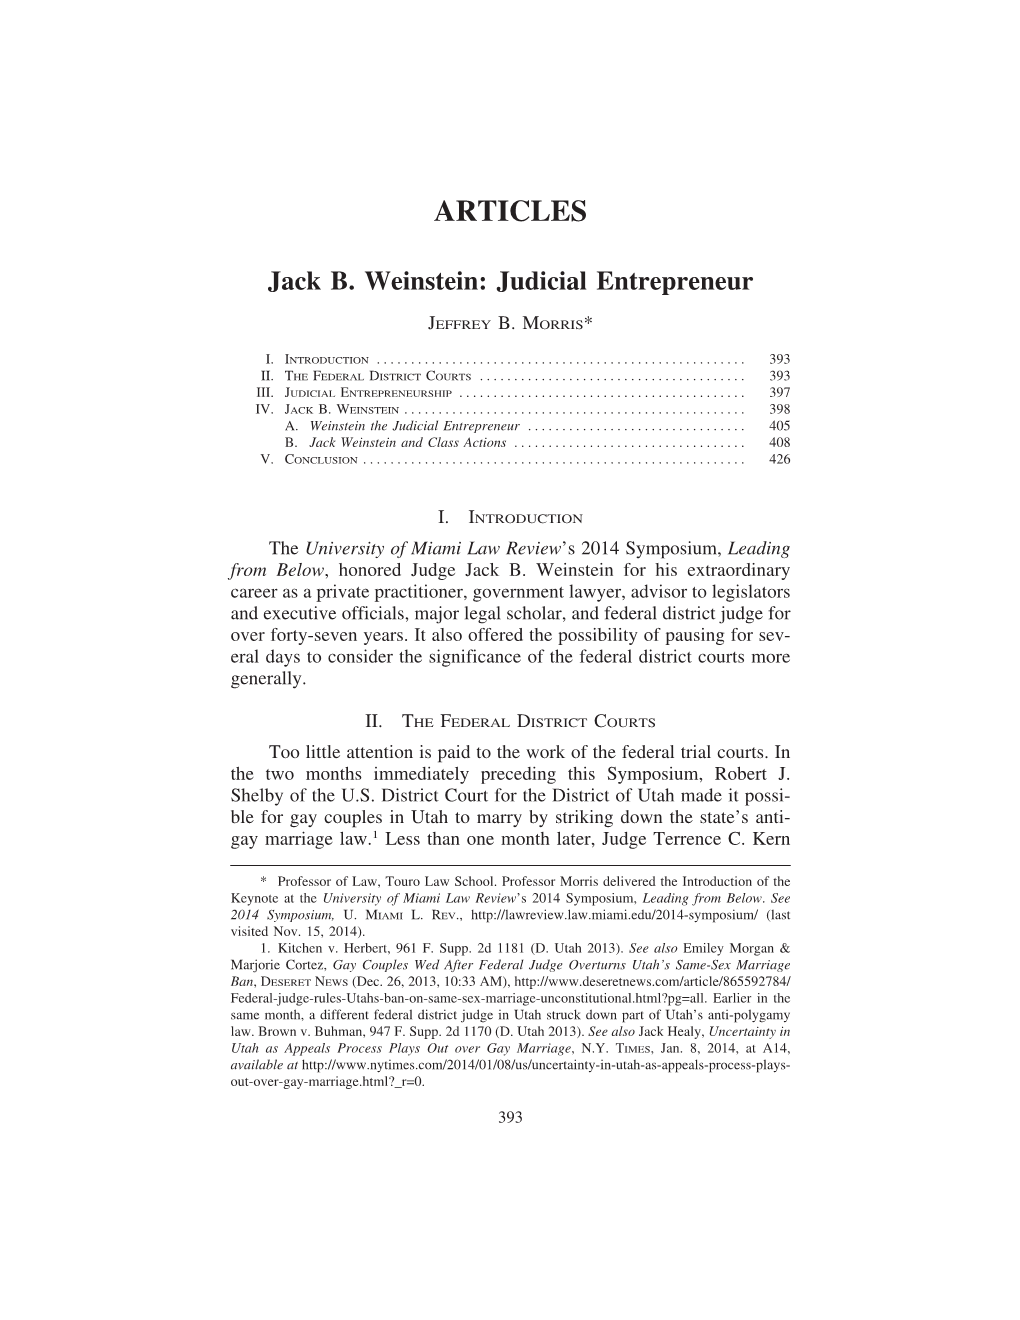 ARTICLES Jack B. Weinstein: Judicial Entrepreneur